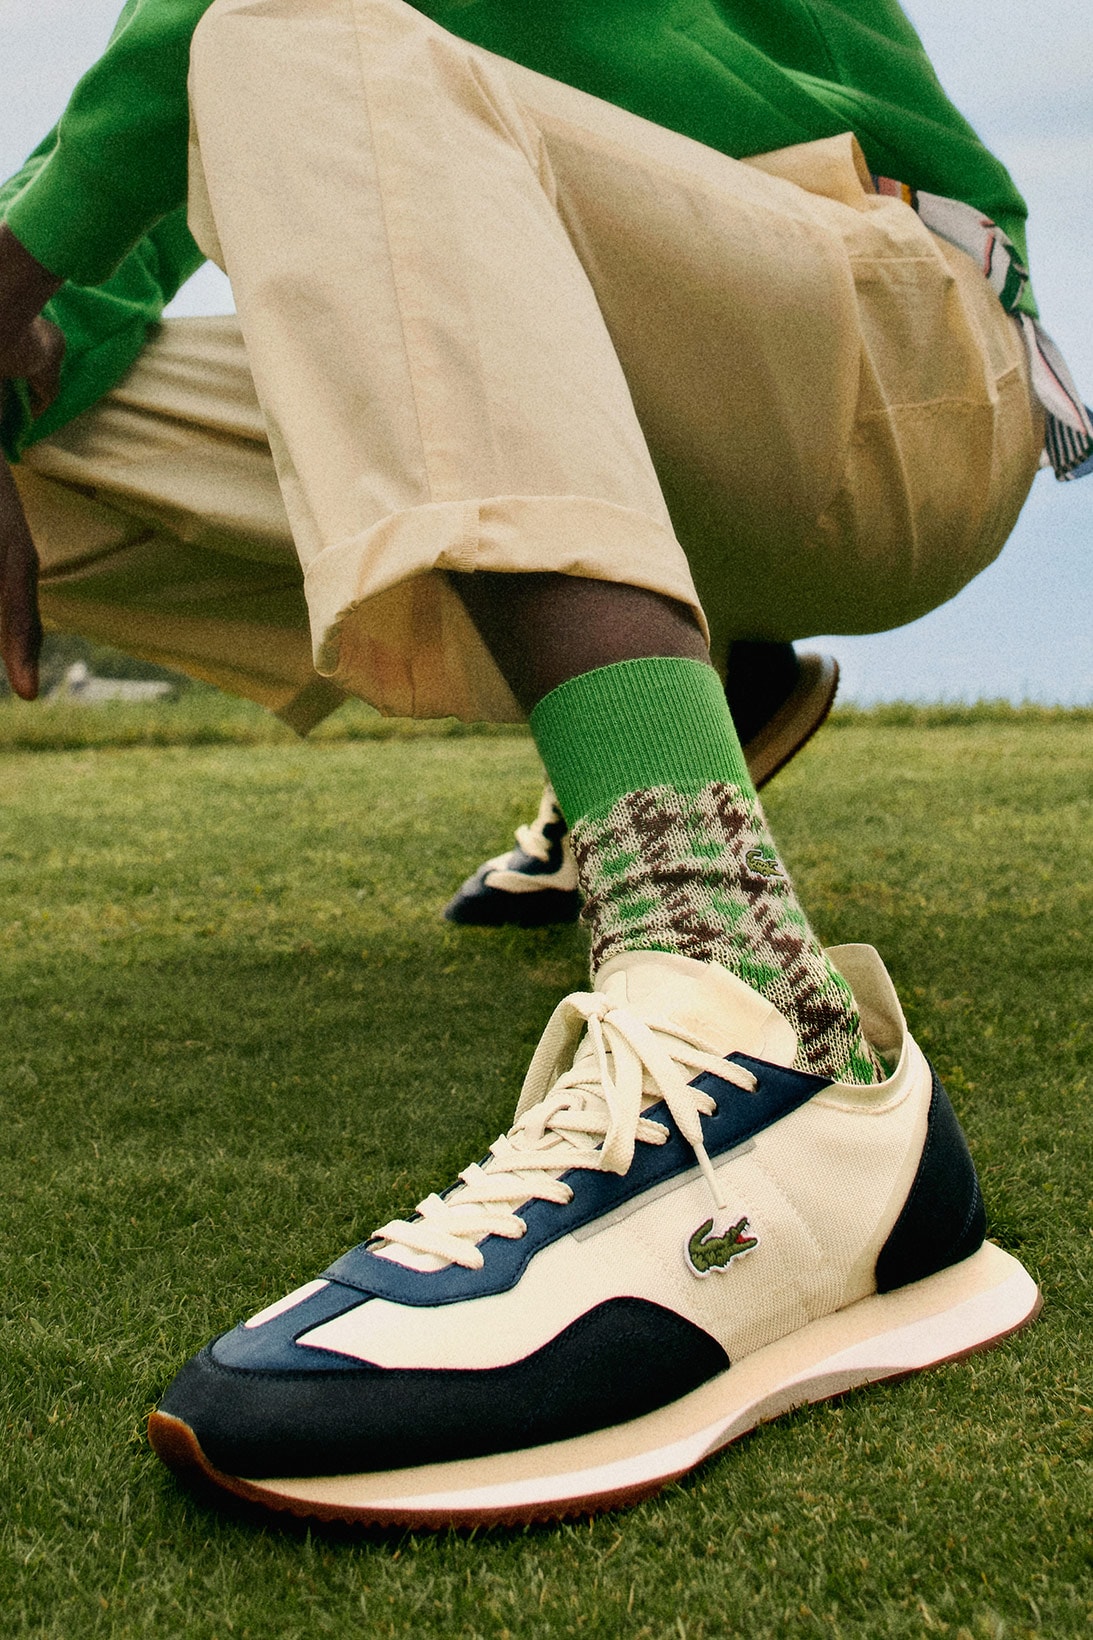 lacoste match break sneakers spring summer collection footwear shoes kicks sneakerhead navy blue white socks pants green sweater